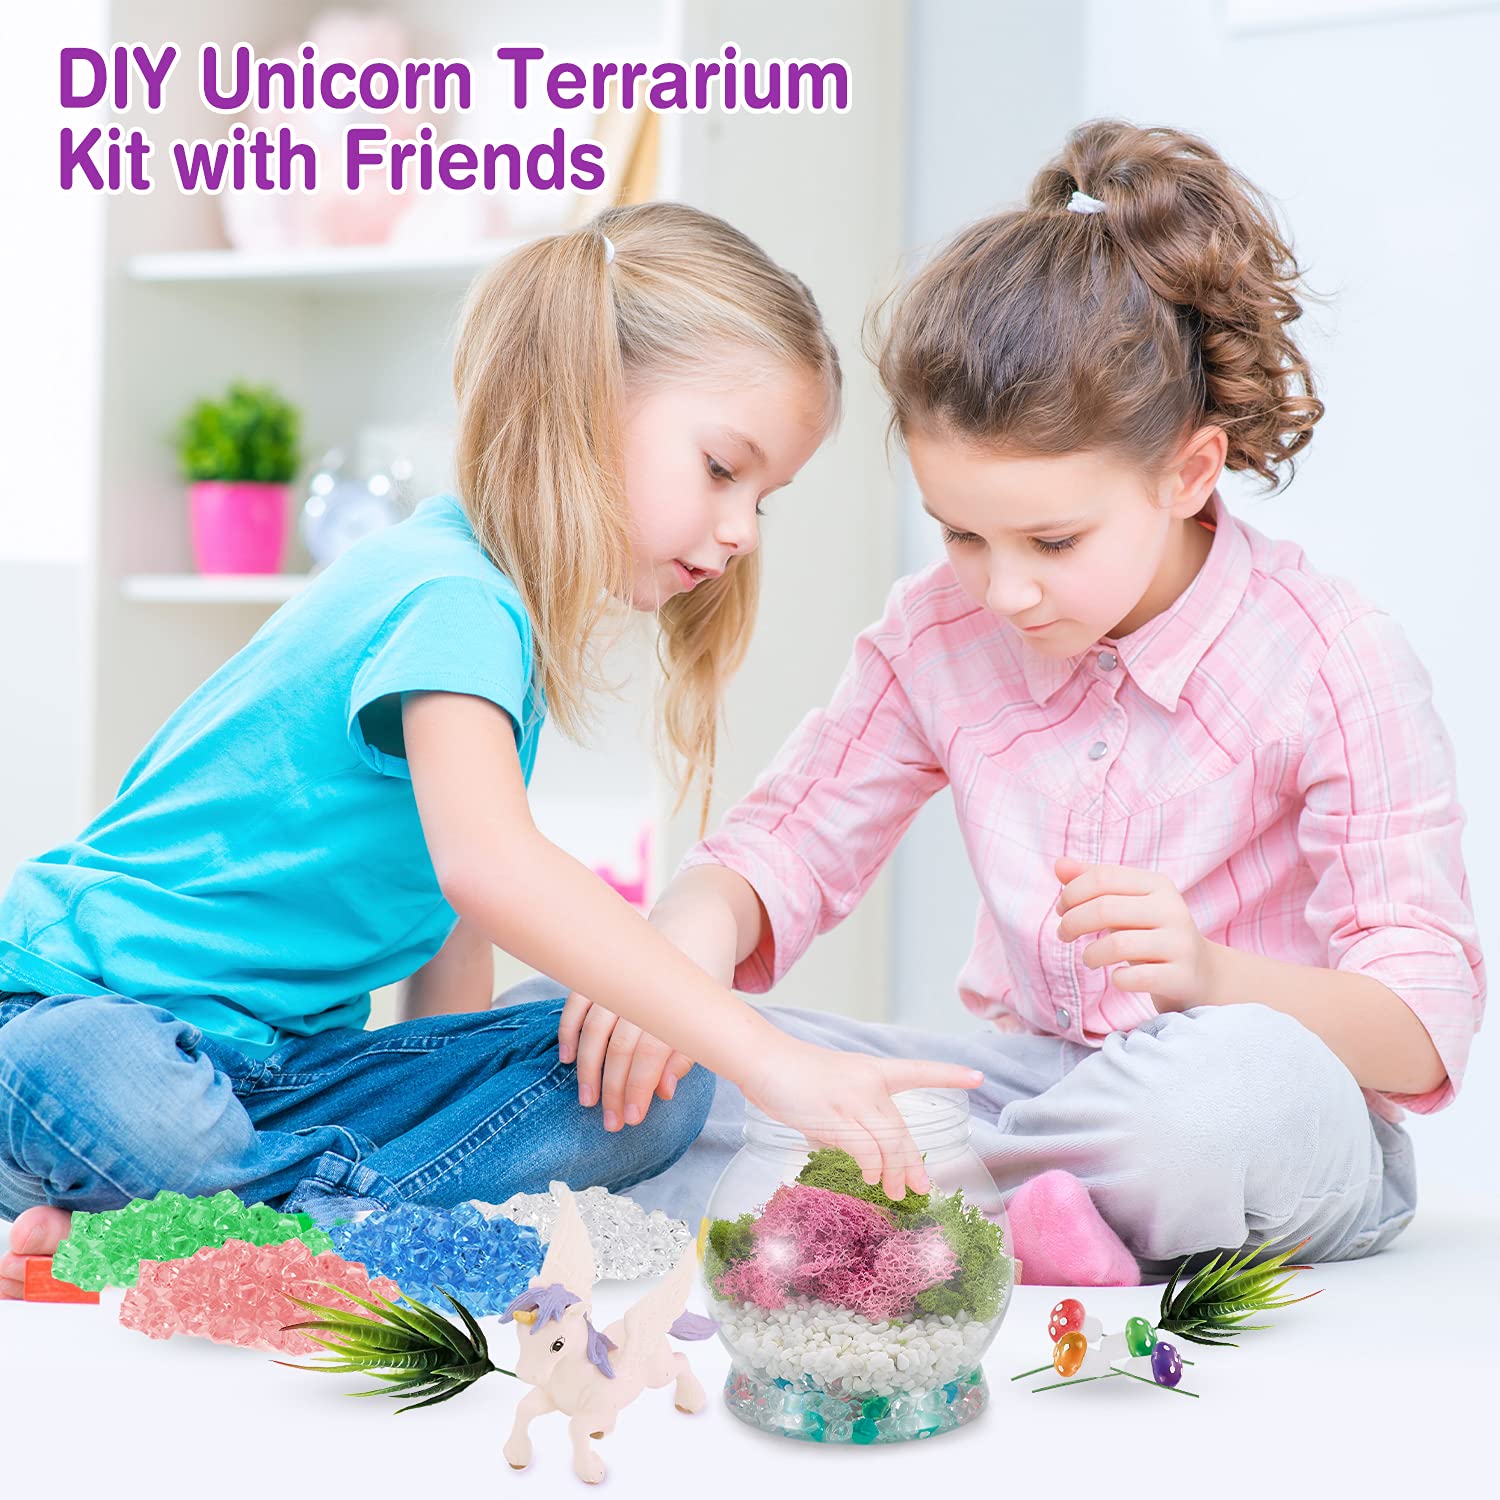 DIY Light-Up Terrarium Kit for Kids with Unicorn Toys, Building Your Wonder Garden, Unicorn Craft Nightlight Gift for Girls Age 3, 4, 5, 6, 7, 8+Years Old, Unicorn Stuff, Birthday Gift, Bedroom Decor